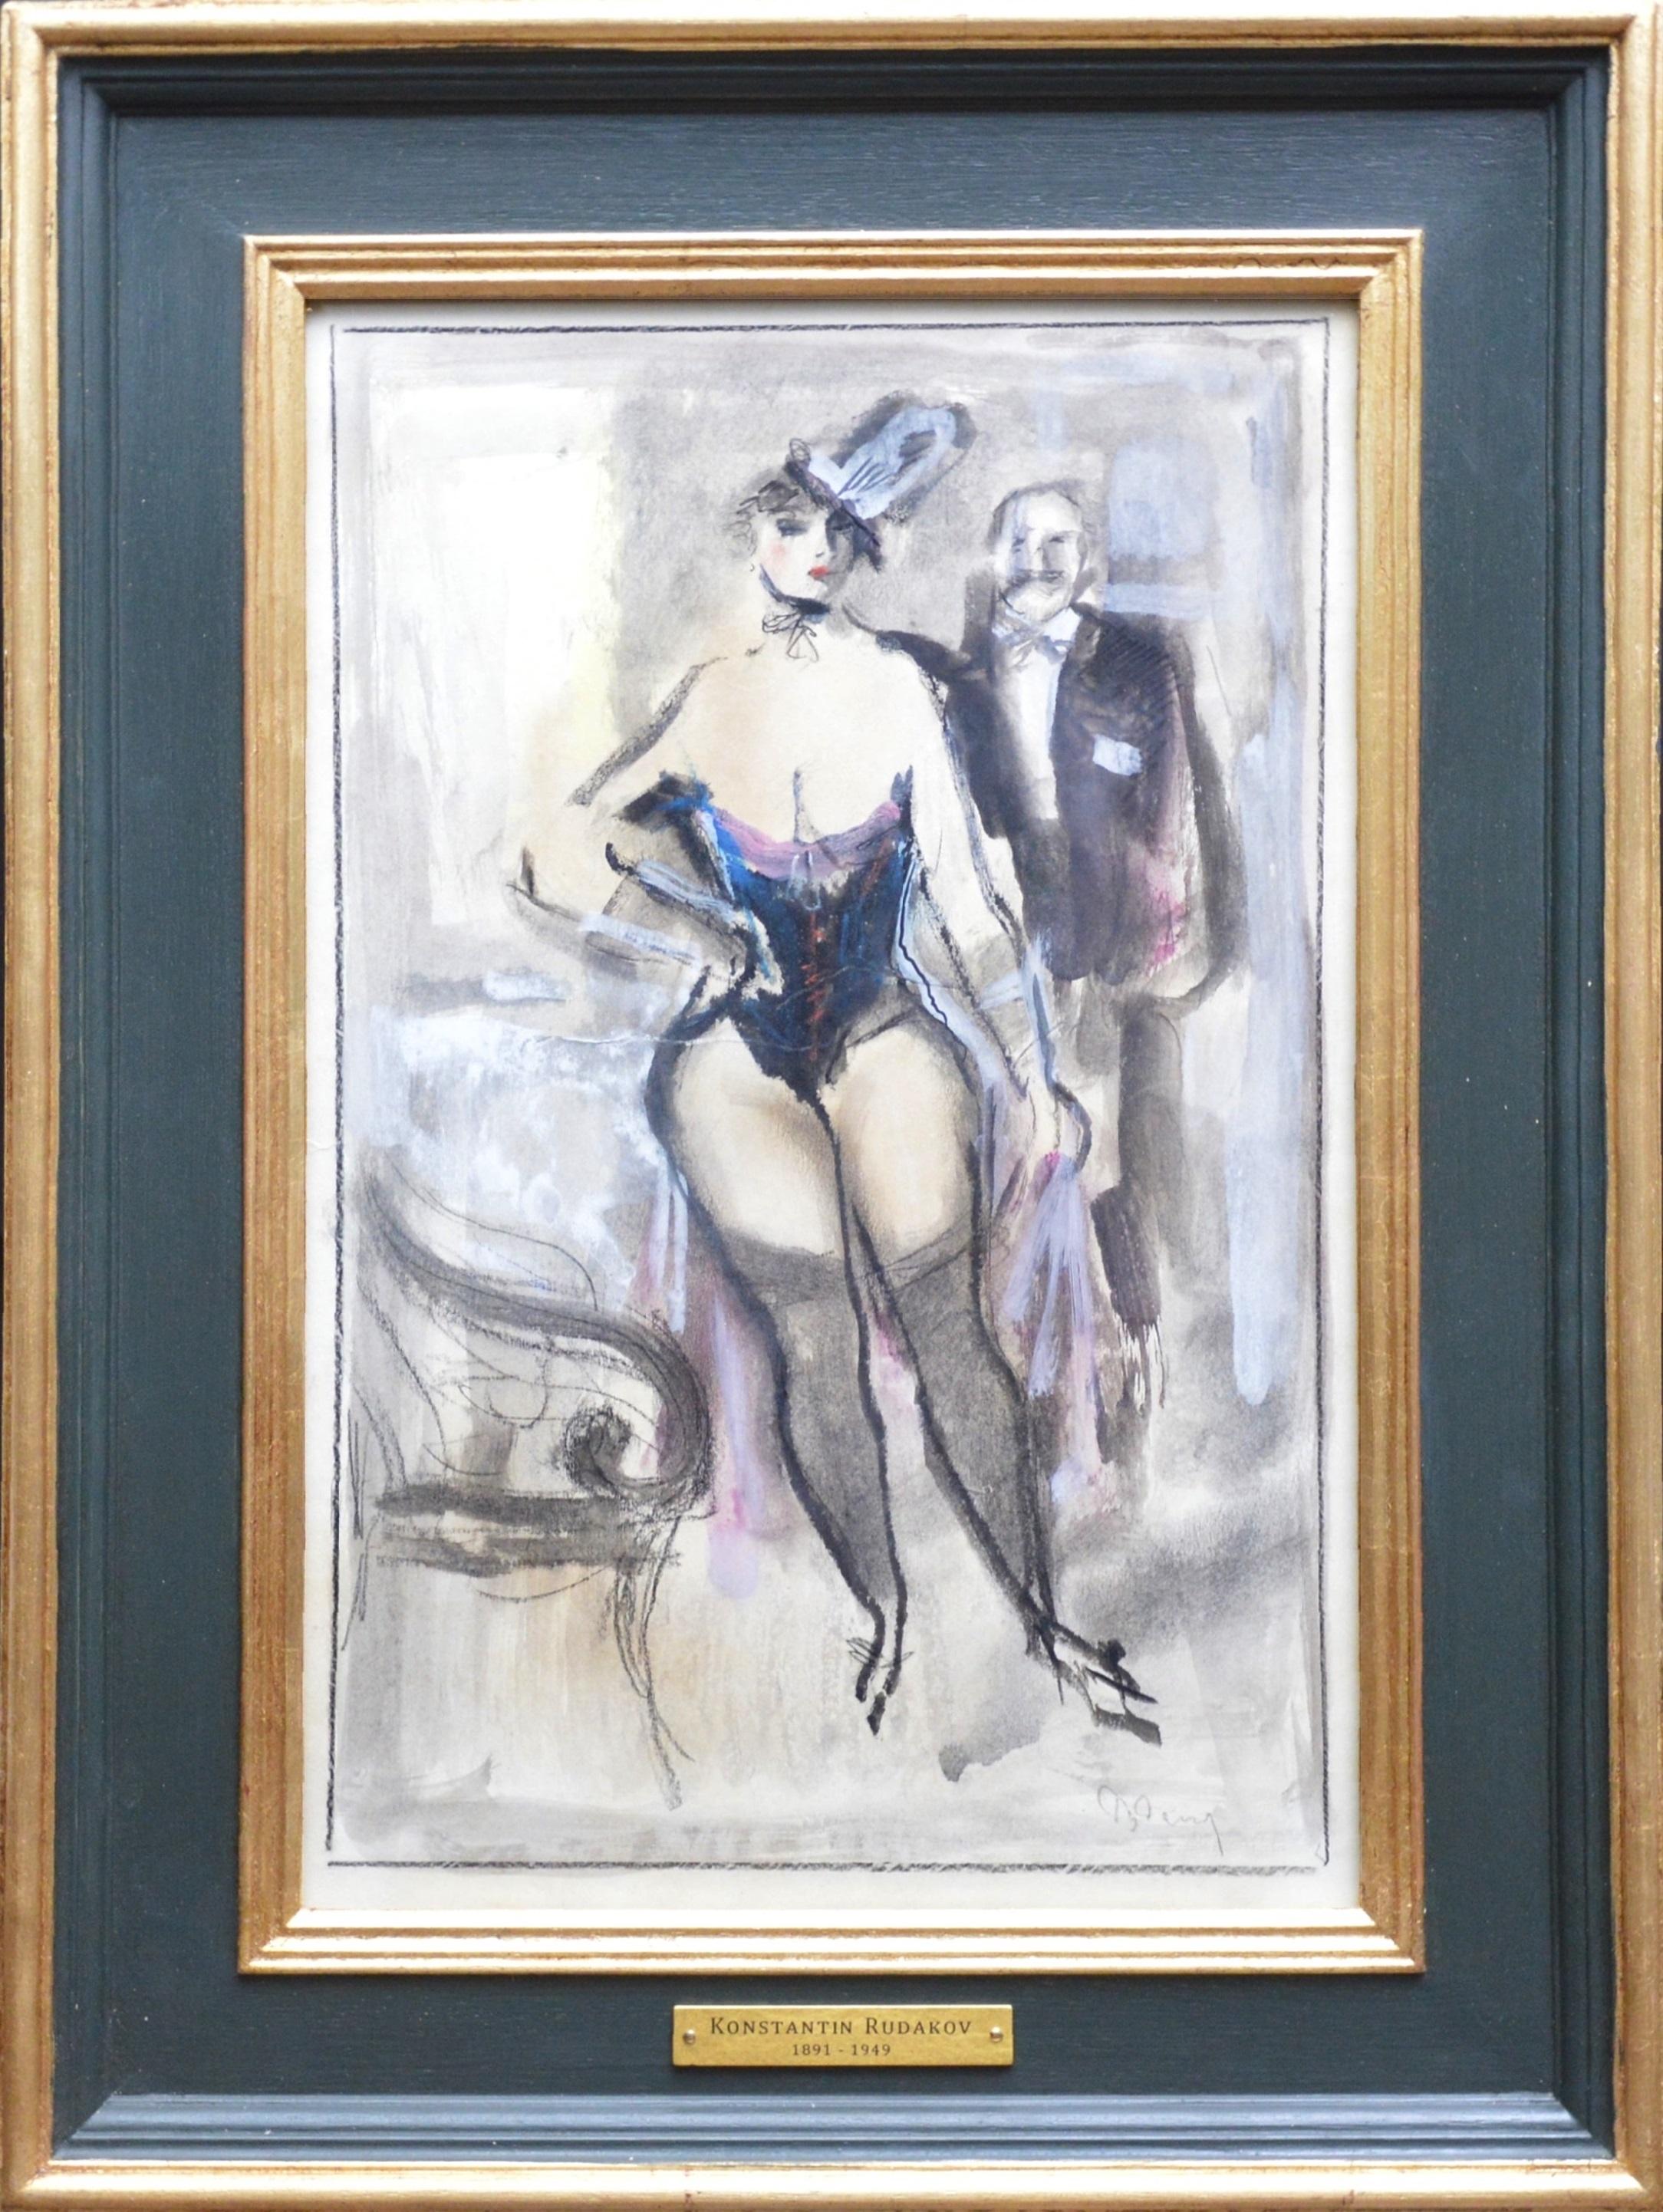 Konstantin Rudakov Portrait - Post-Impressionist 1930s Babylon Berlin Bordello Scene of Cabaret Girl & Client